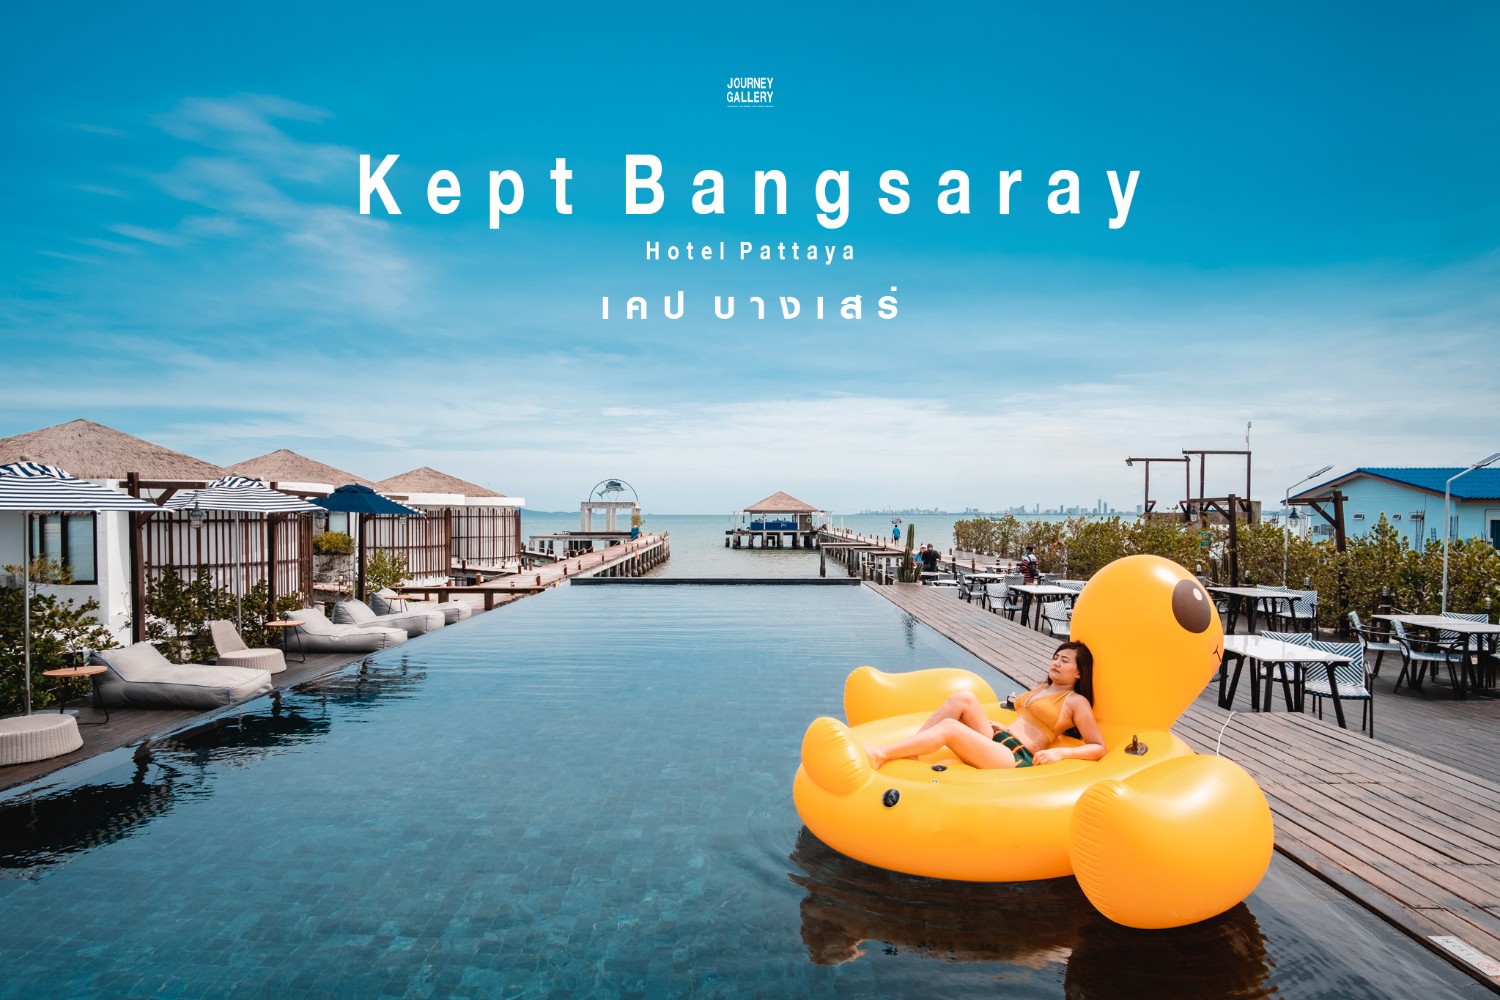 Kept Bangsaray - เคป บางเสร่ พักผ่อนสุดชิล ริมทะเลสัตหีบ - Pantip